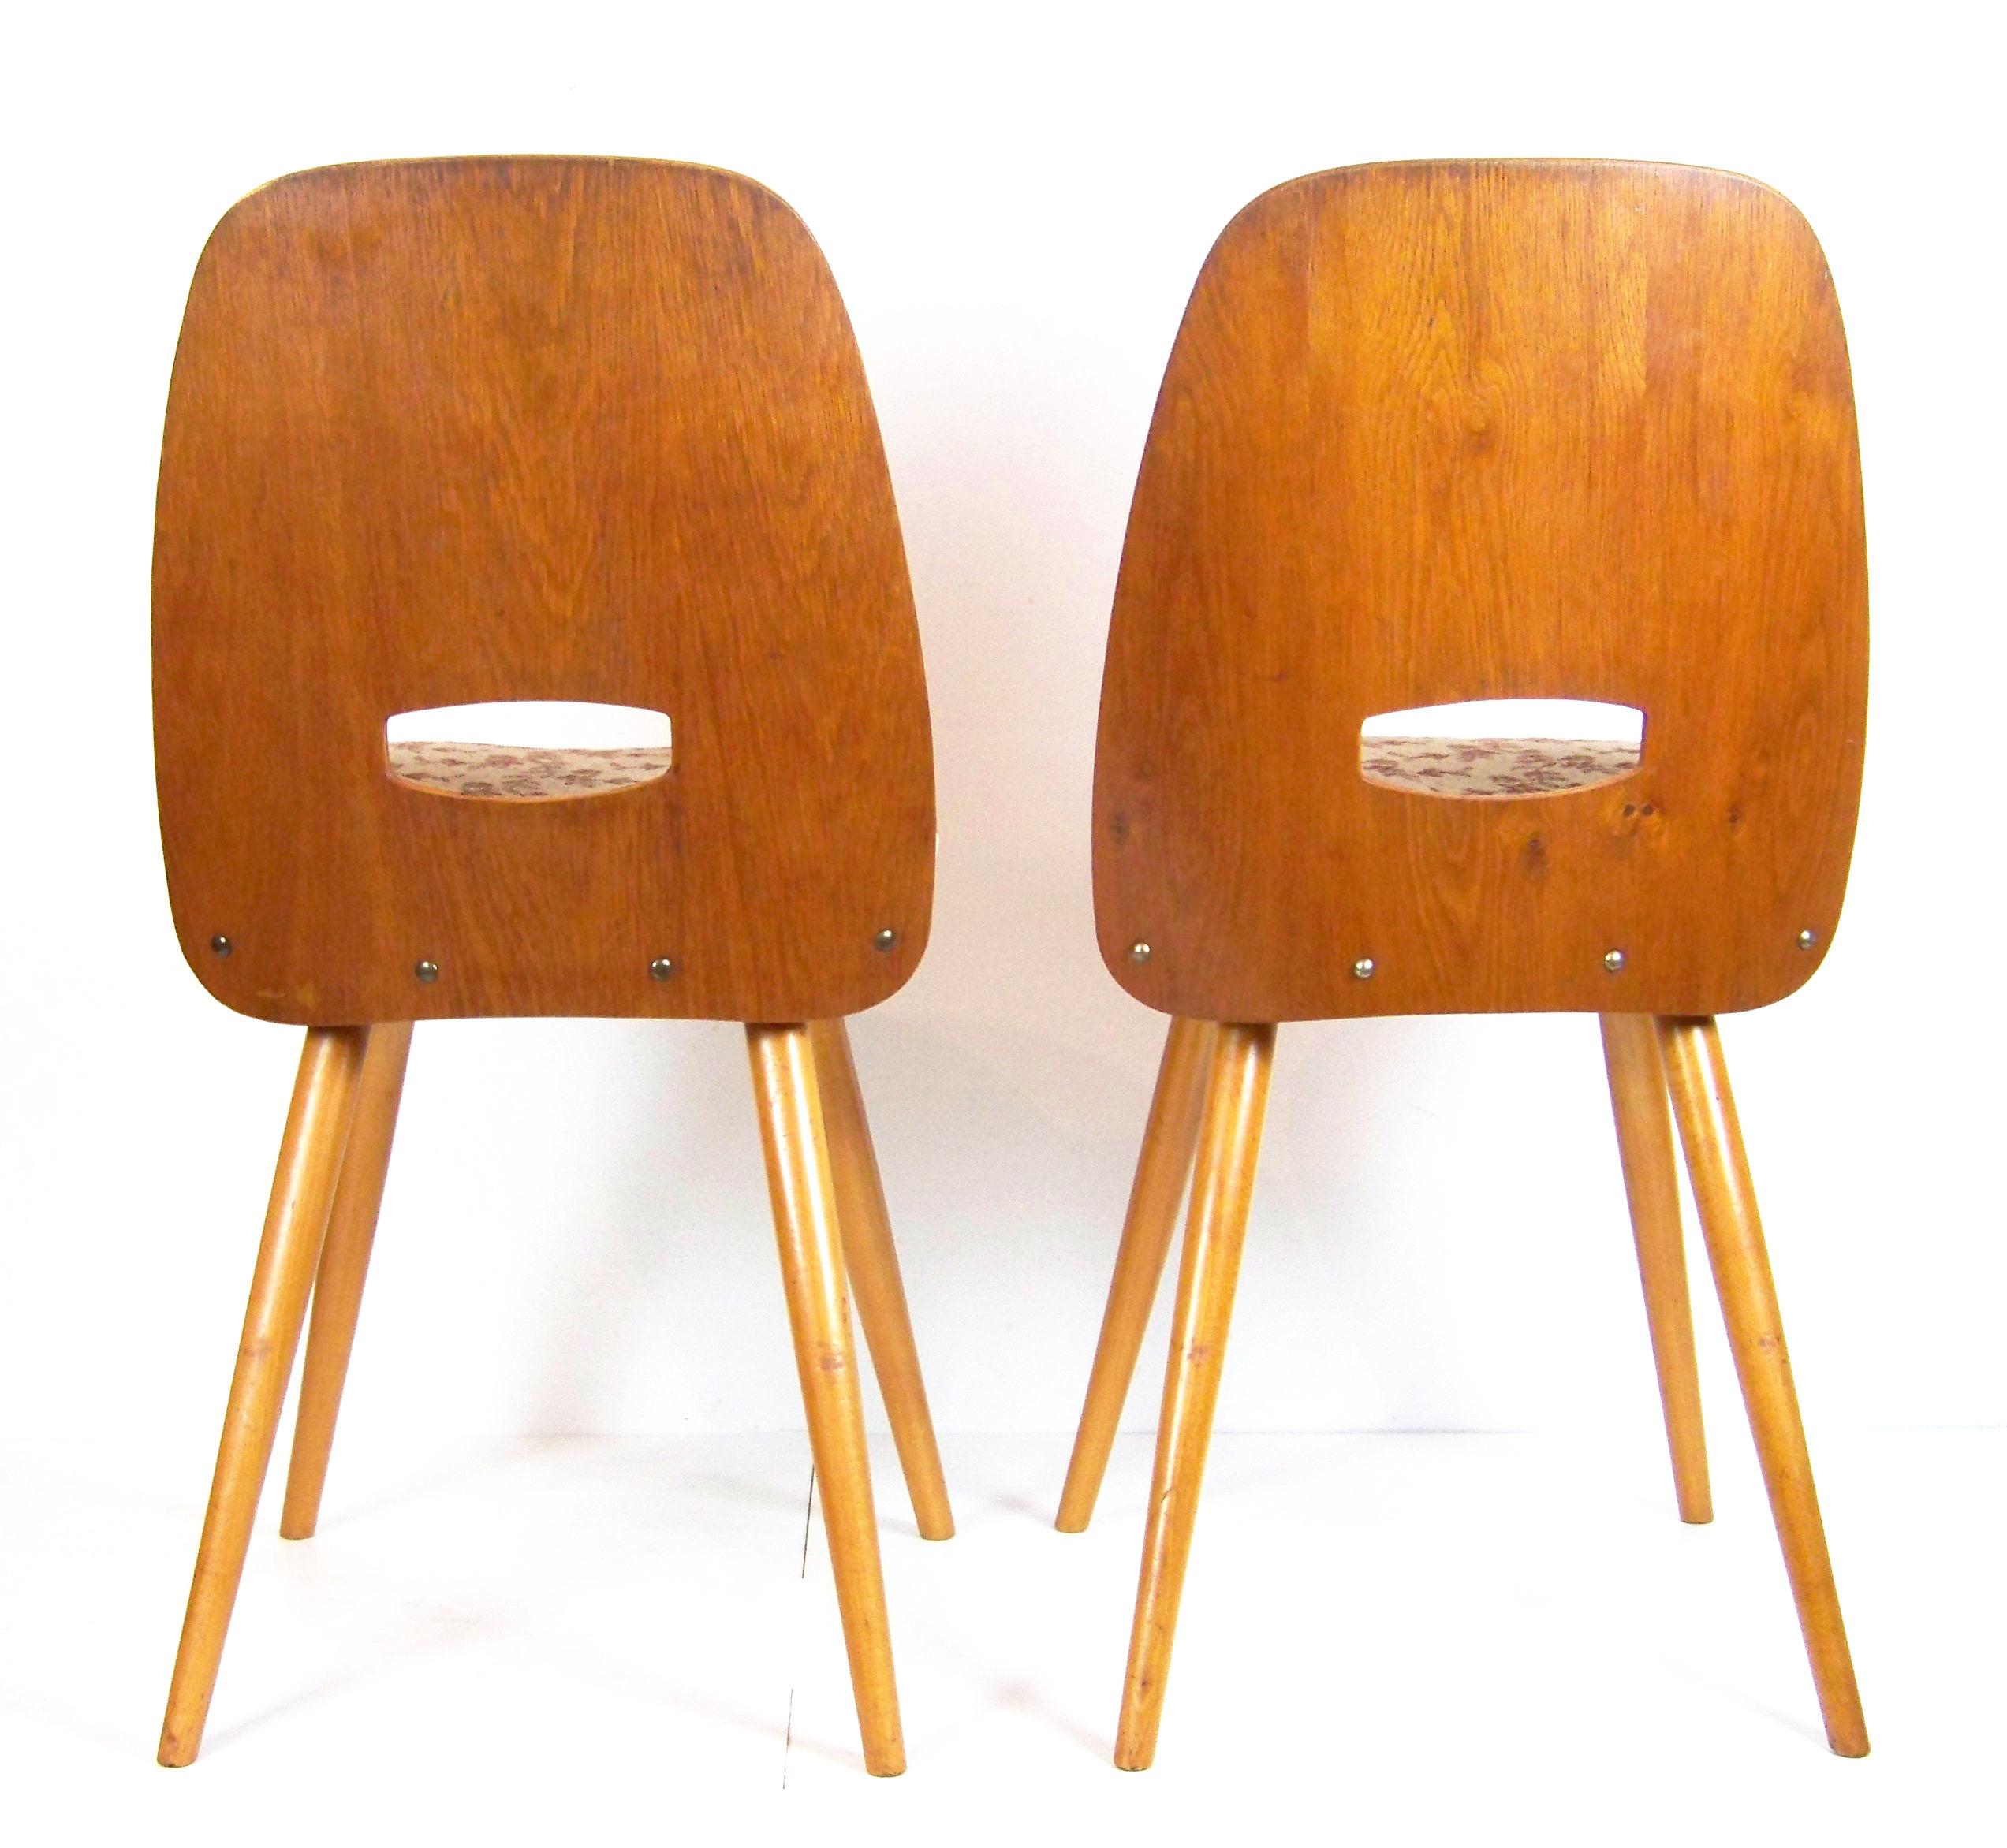 Fabric Two Chairs Tatra Designed by Frantisek Jirak, 1950s